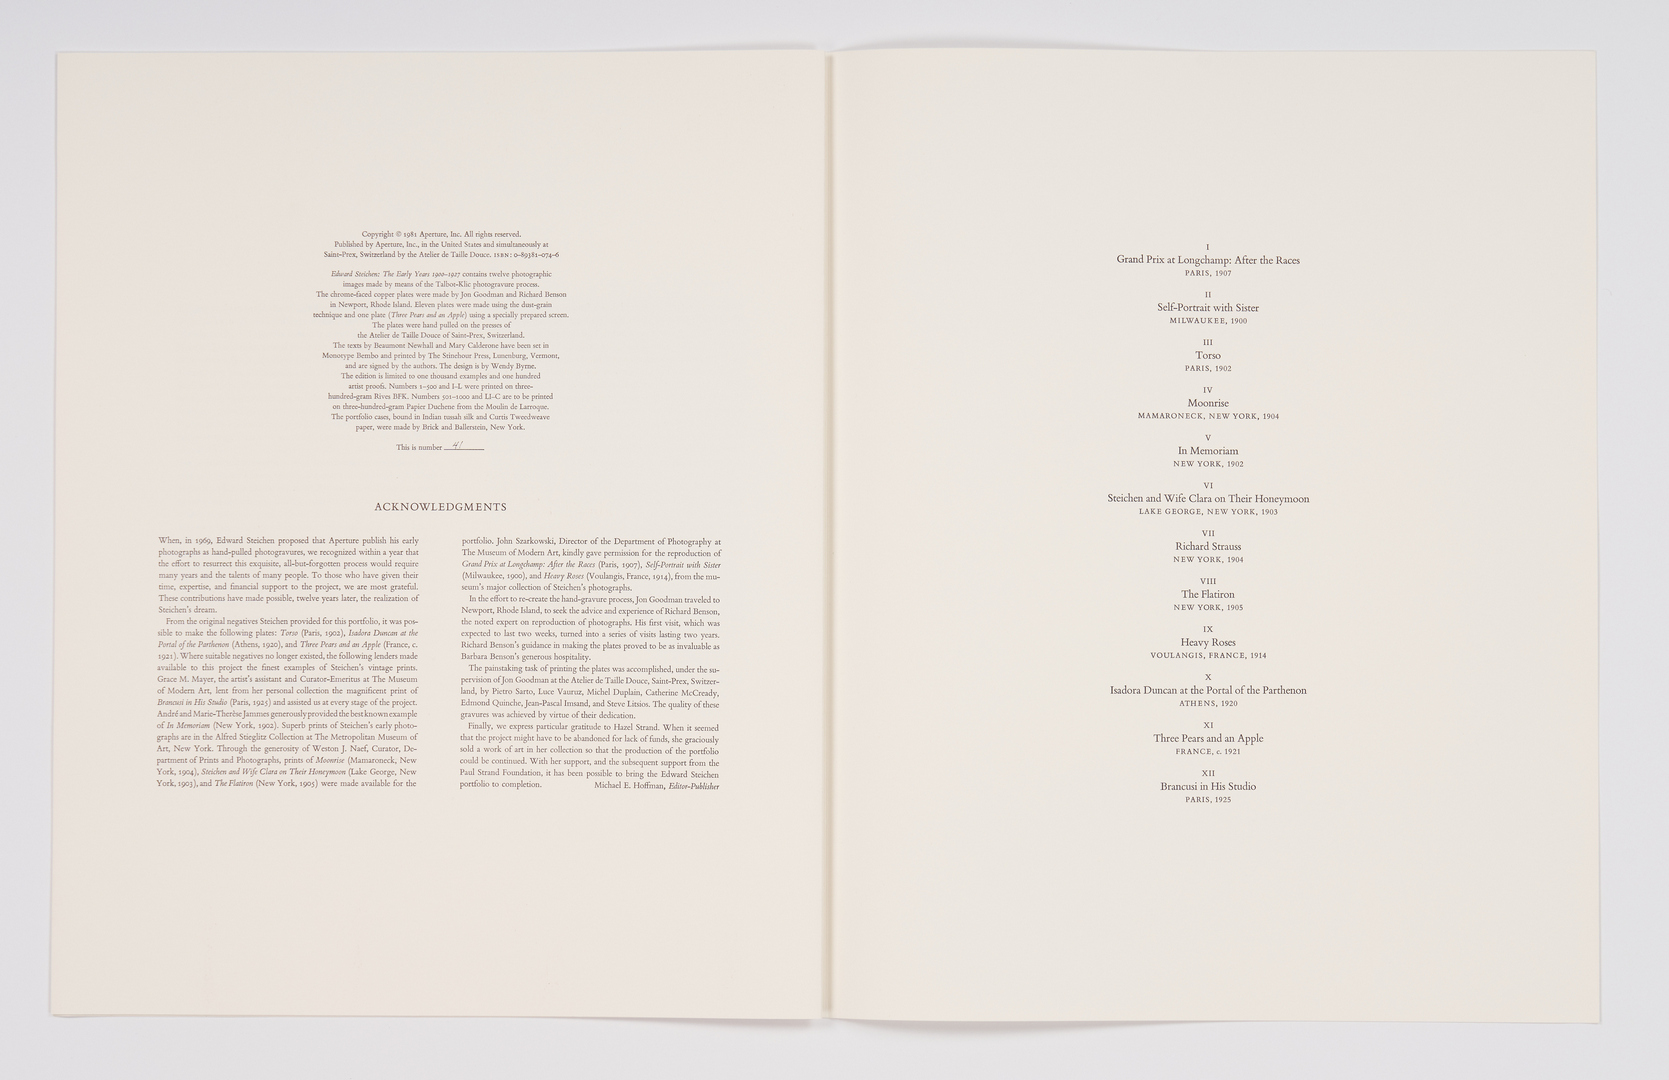 Lot 599: Edward Steichen, The Early Years, Print Portfolio